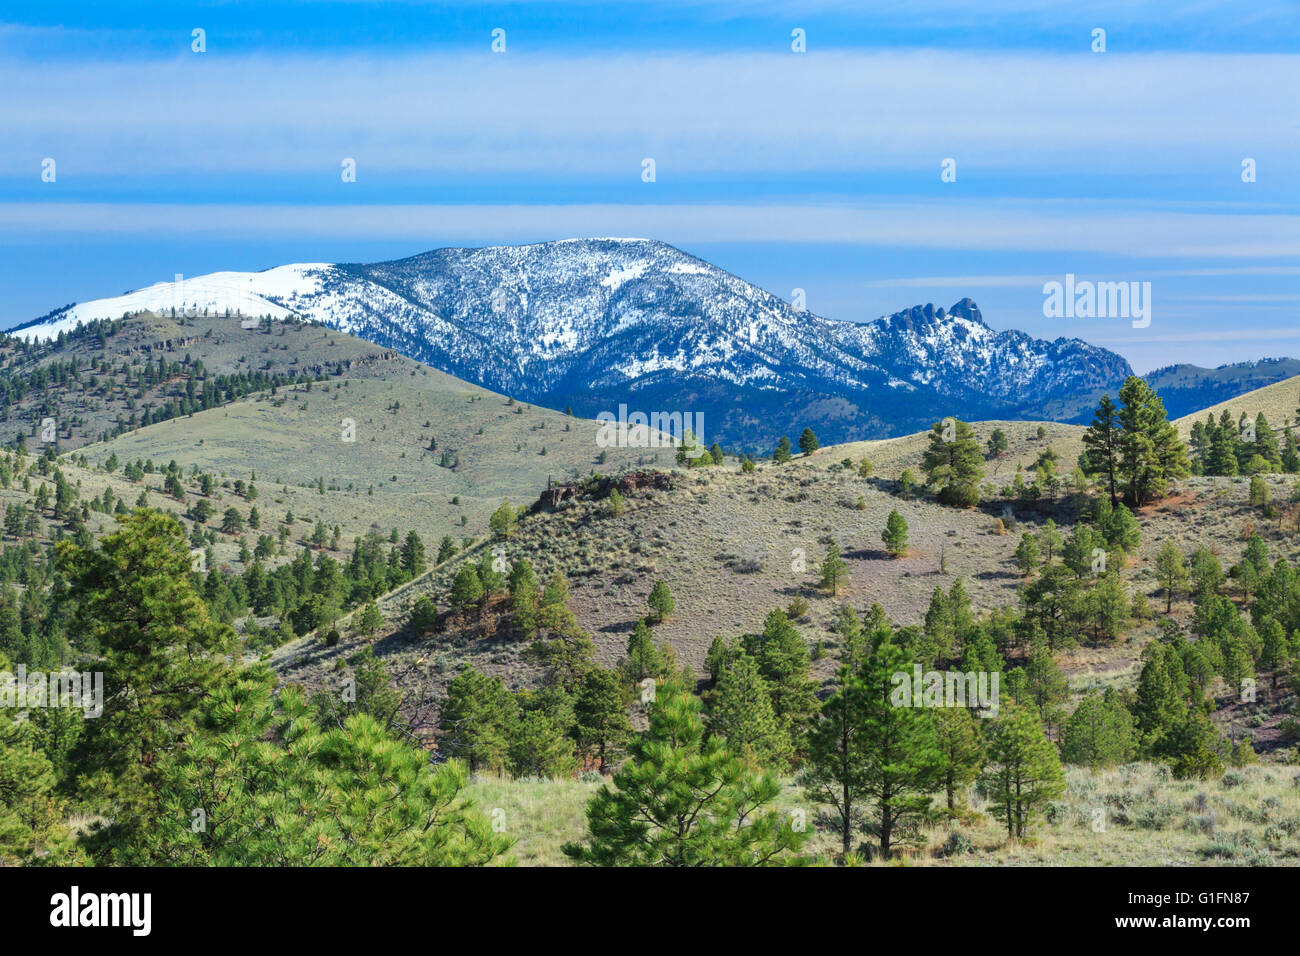 sleeping giant mountain and foothills near helena, montana Stock Photo